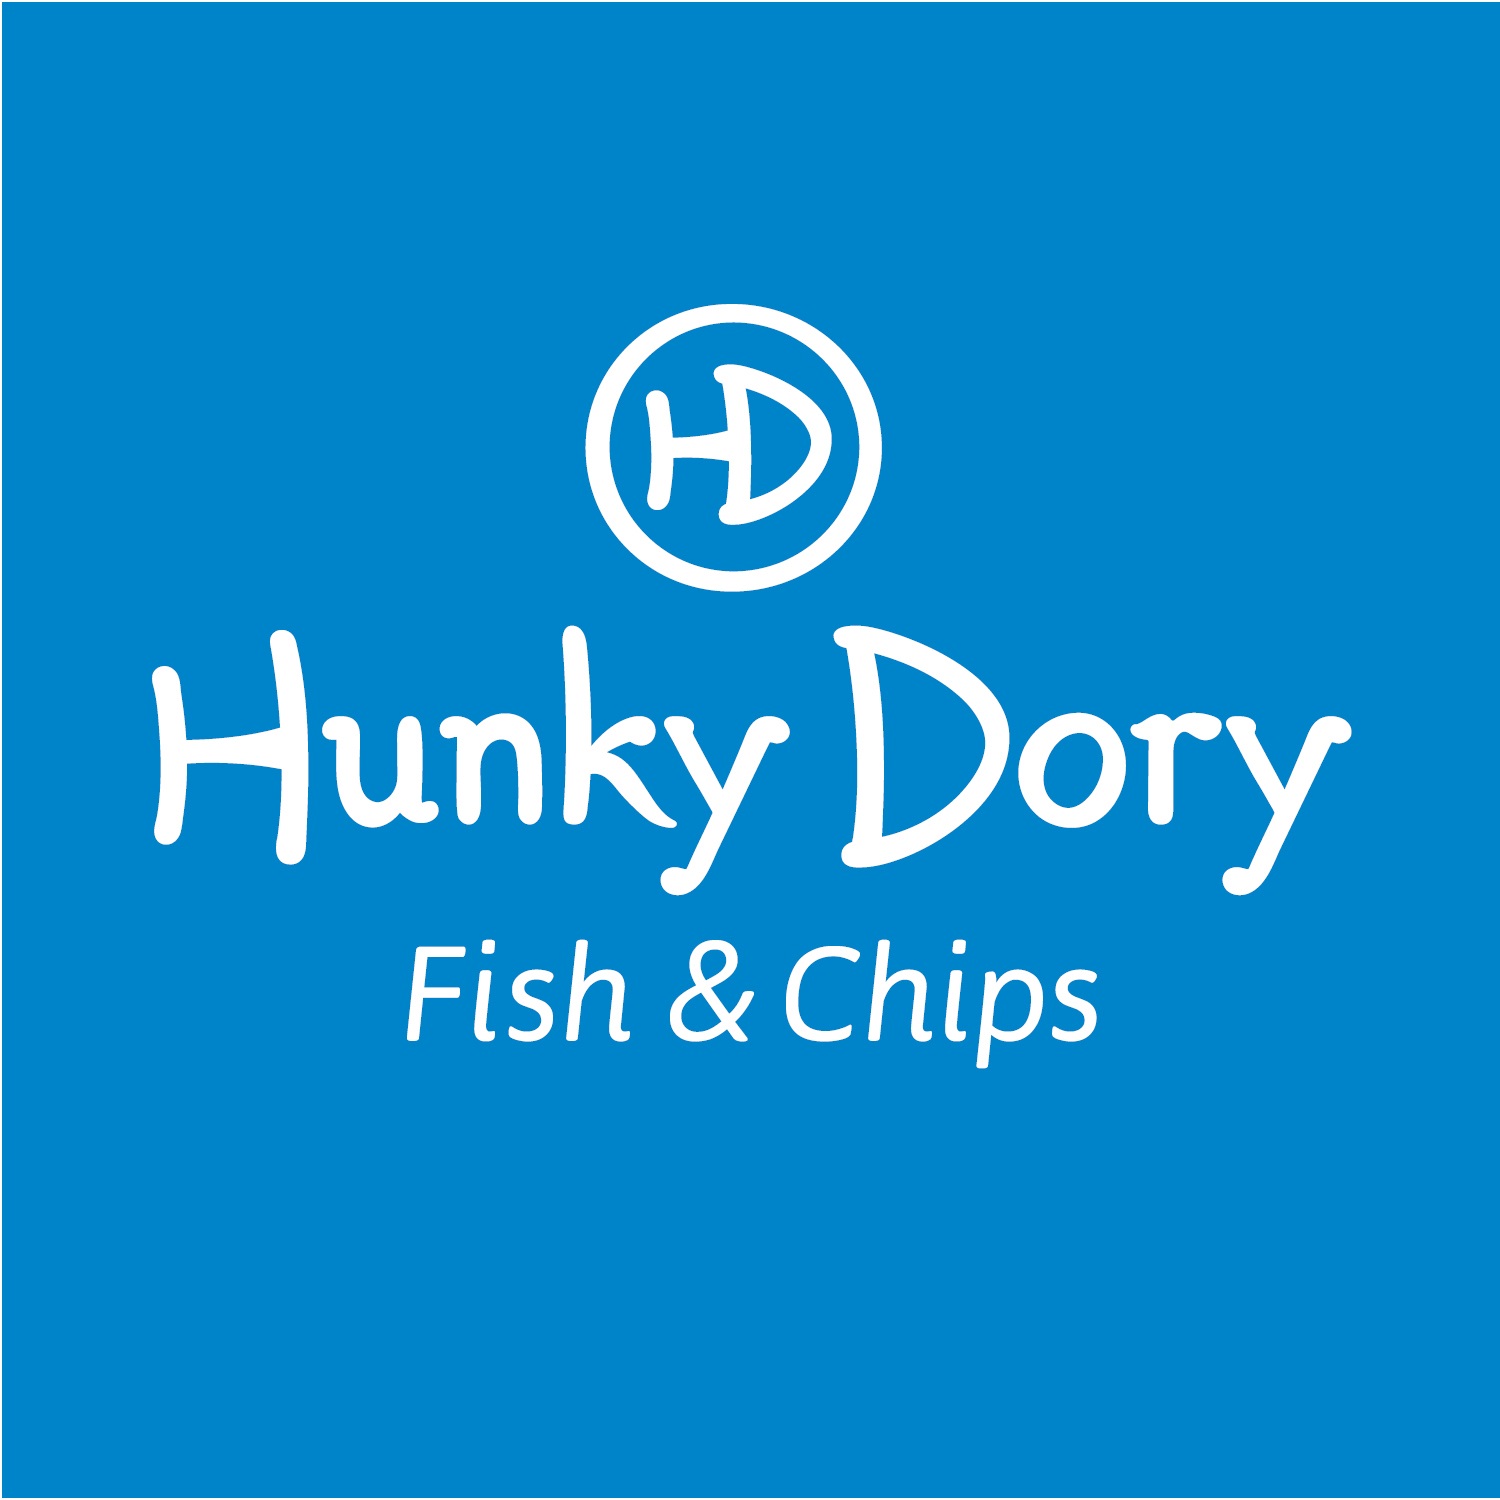 Hunky Dory Fish & Chips Logo